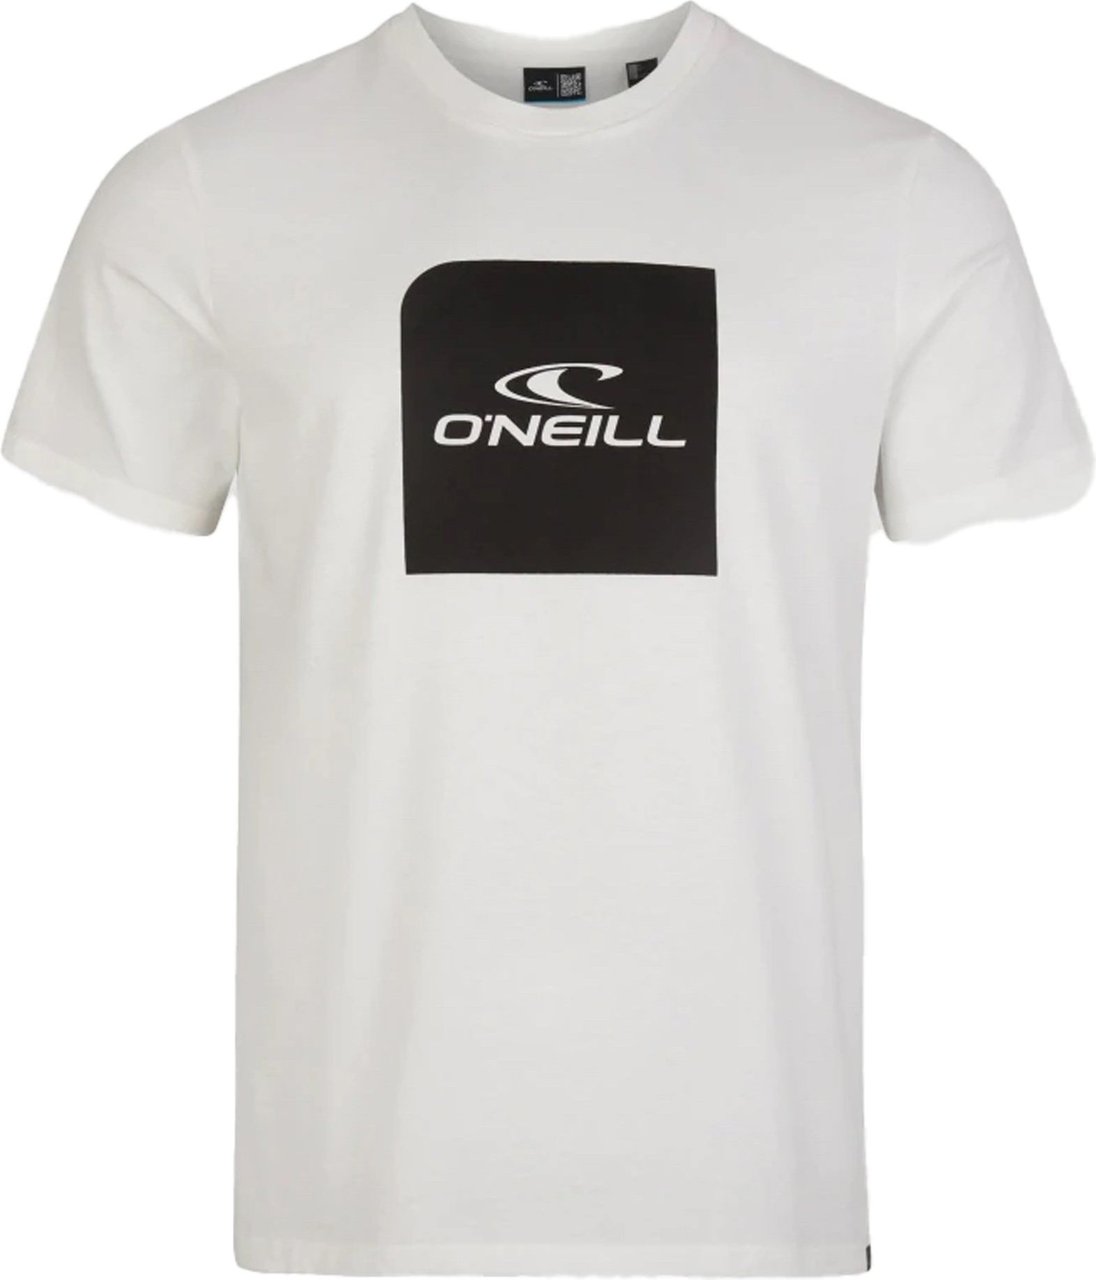 O'neill T-shirt Man Cube N2850007-11010 Wit